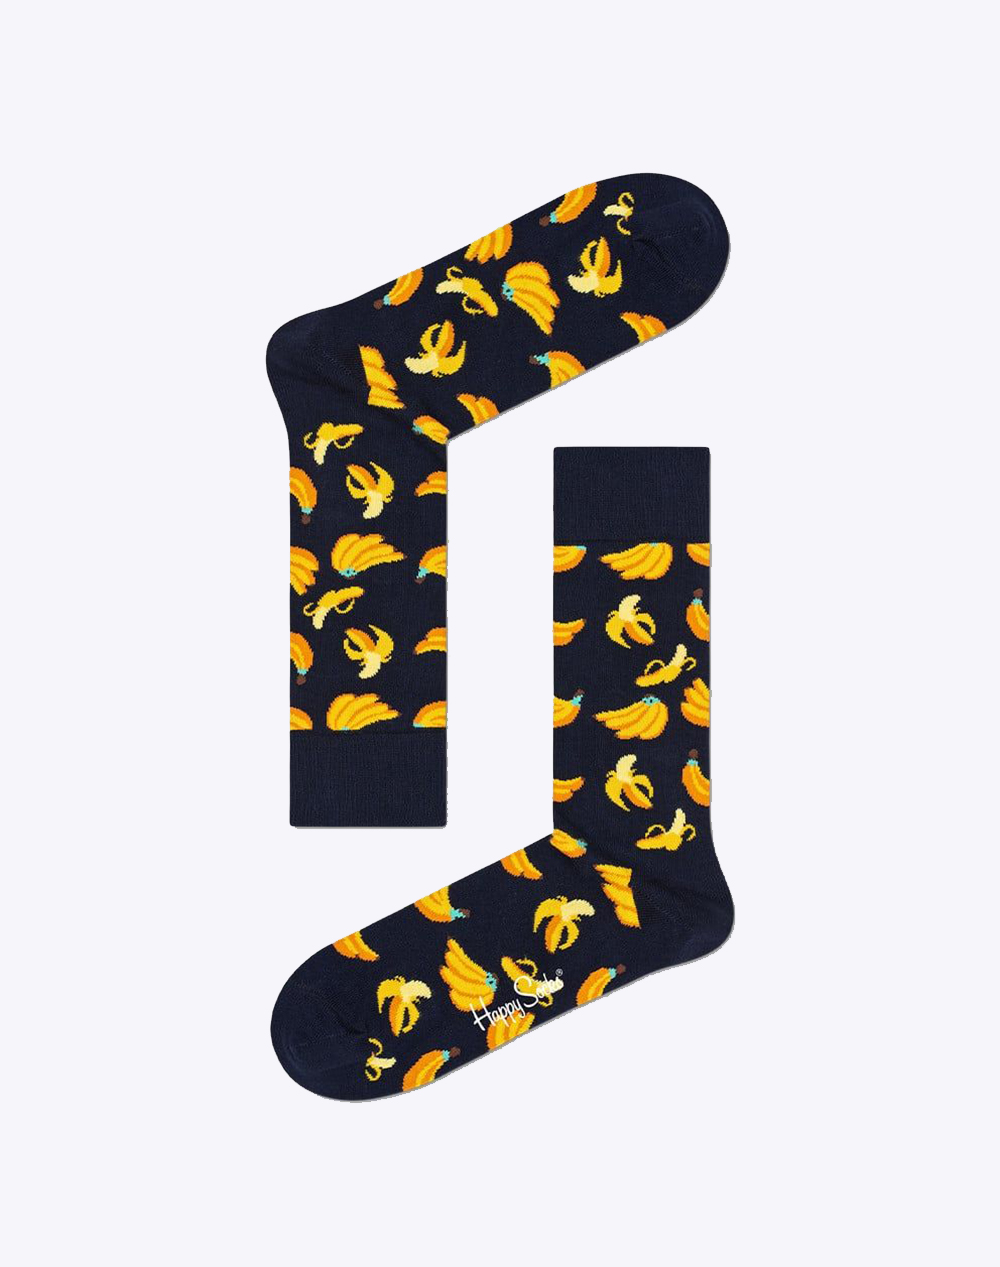 HAPPY SOCKS Banana Sock BAN01-6550-6550 Multi